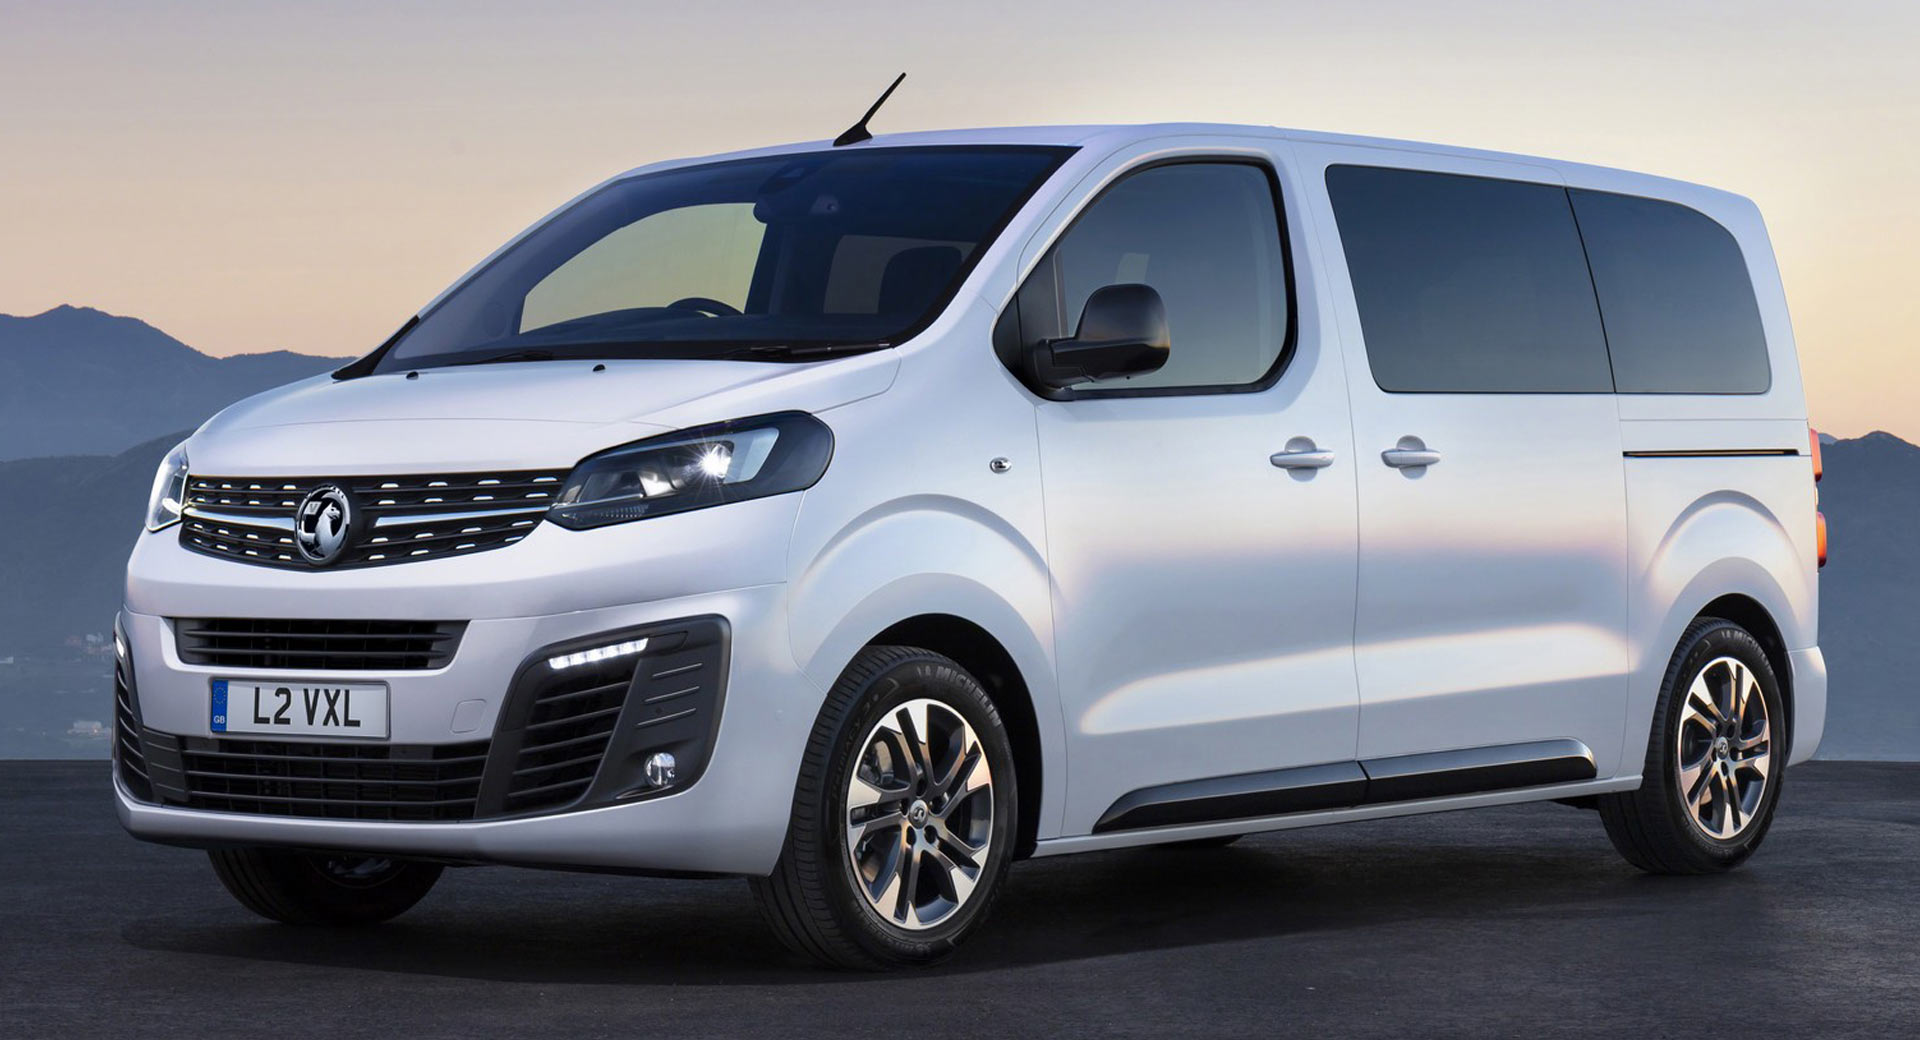 New Opel Vivaro Life Is A 9-Seat Van 